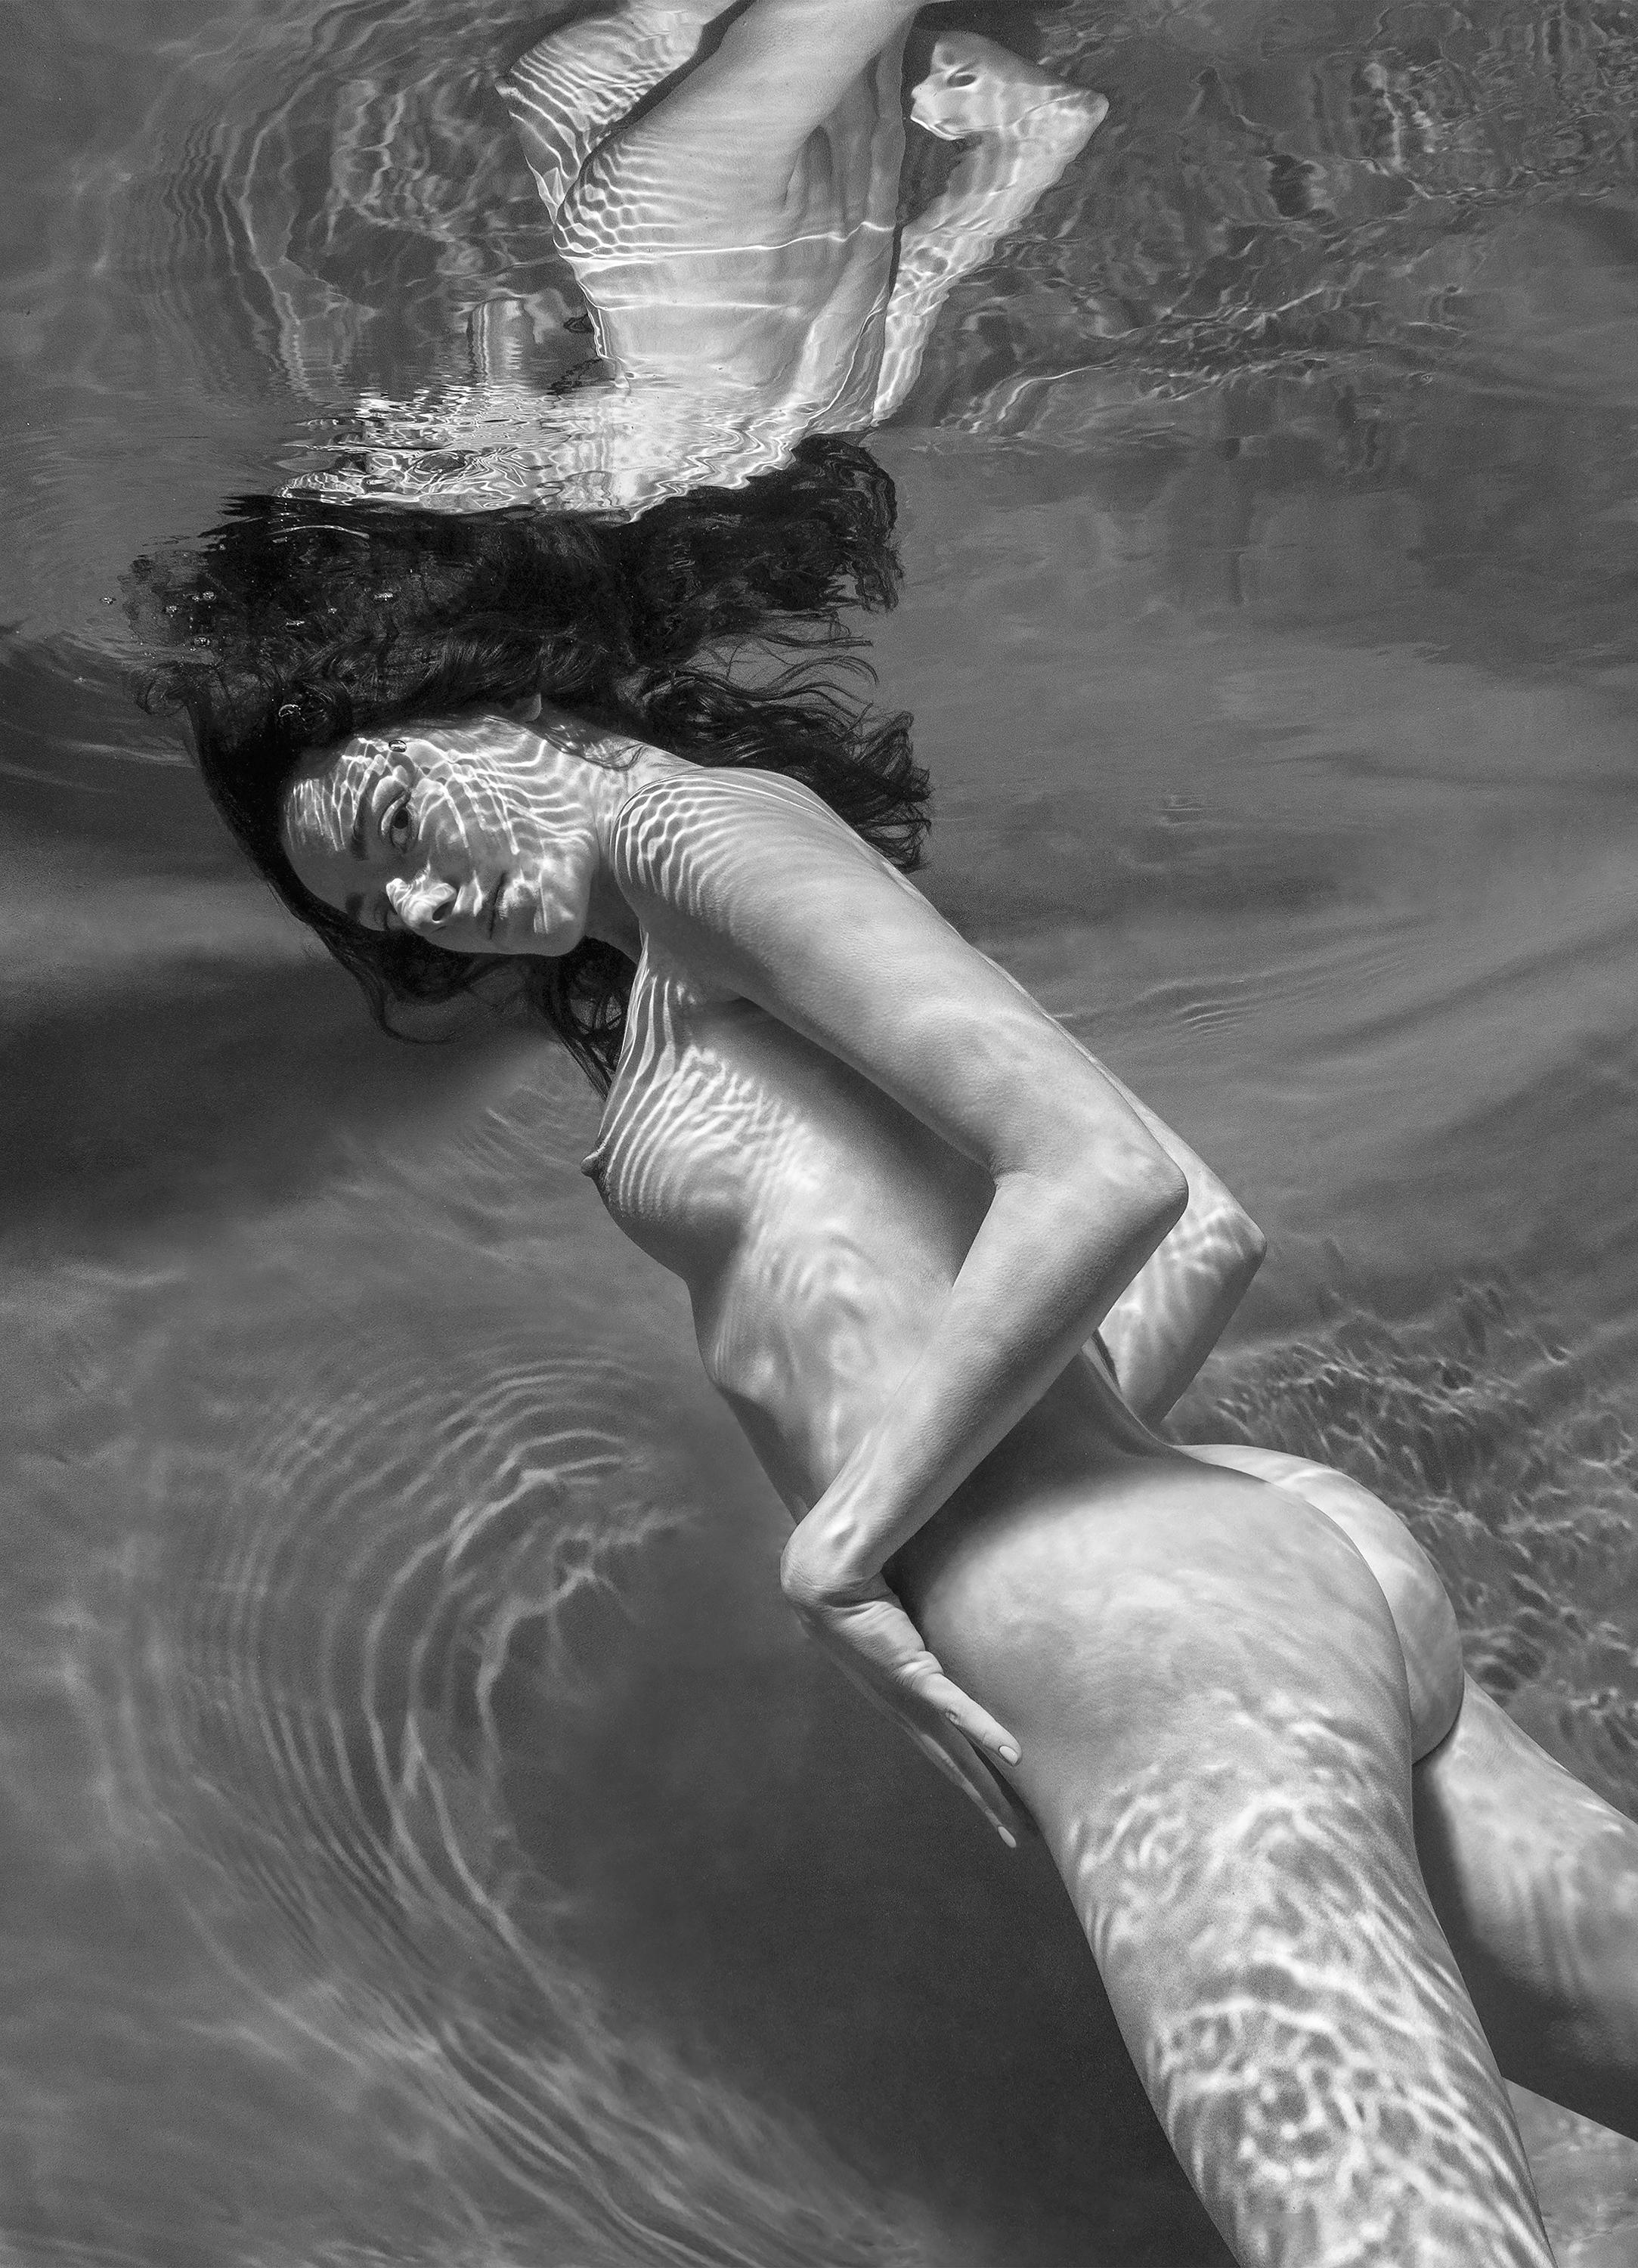 Eyes and Stripes - underwater b&w nude photograph - print on aluminum 36х26"